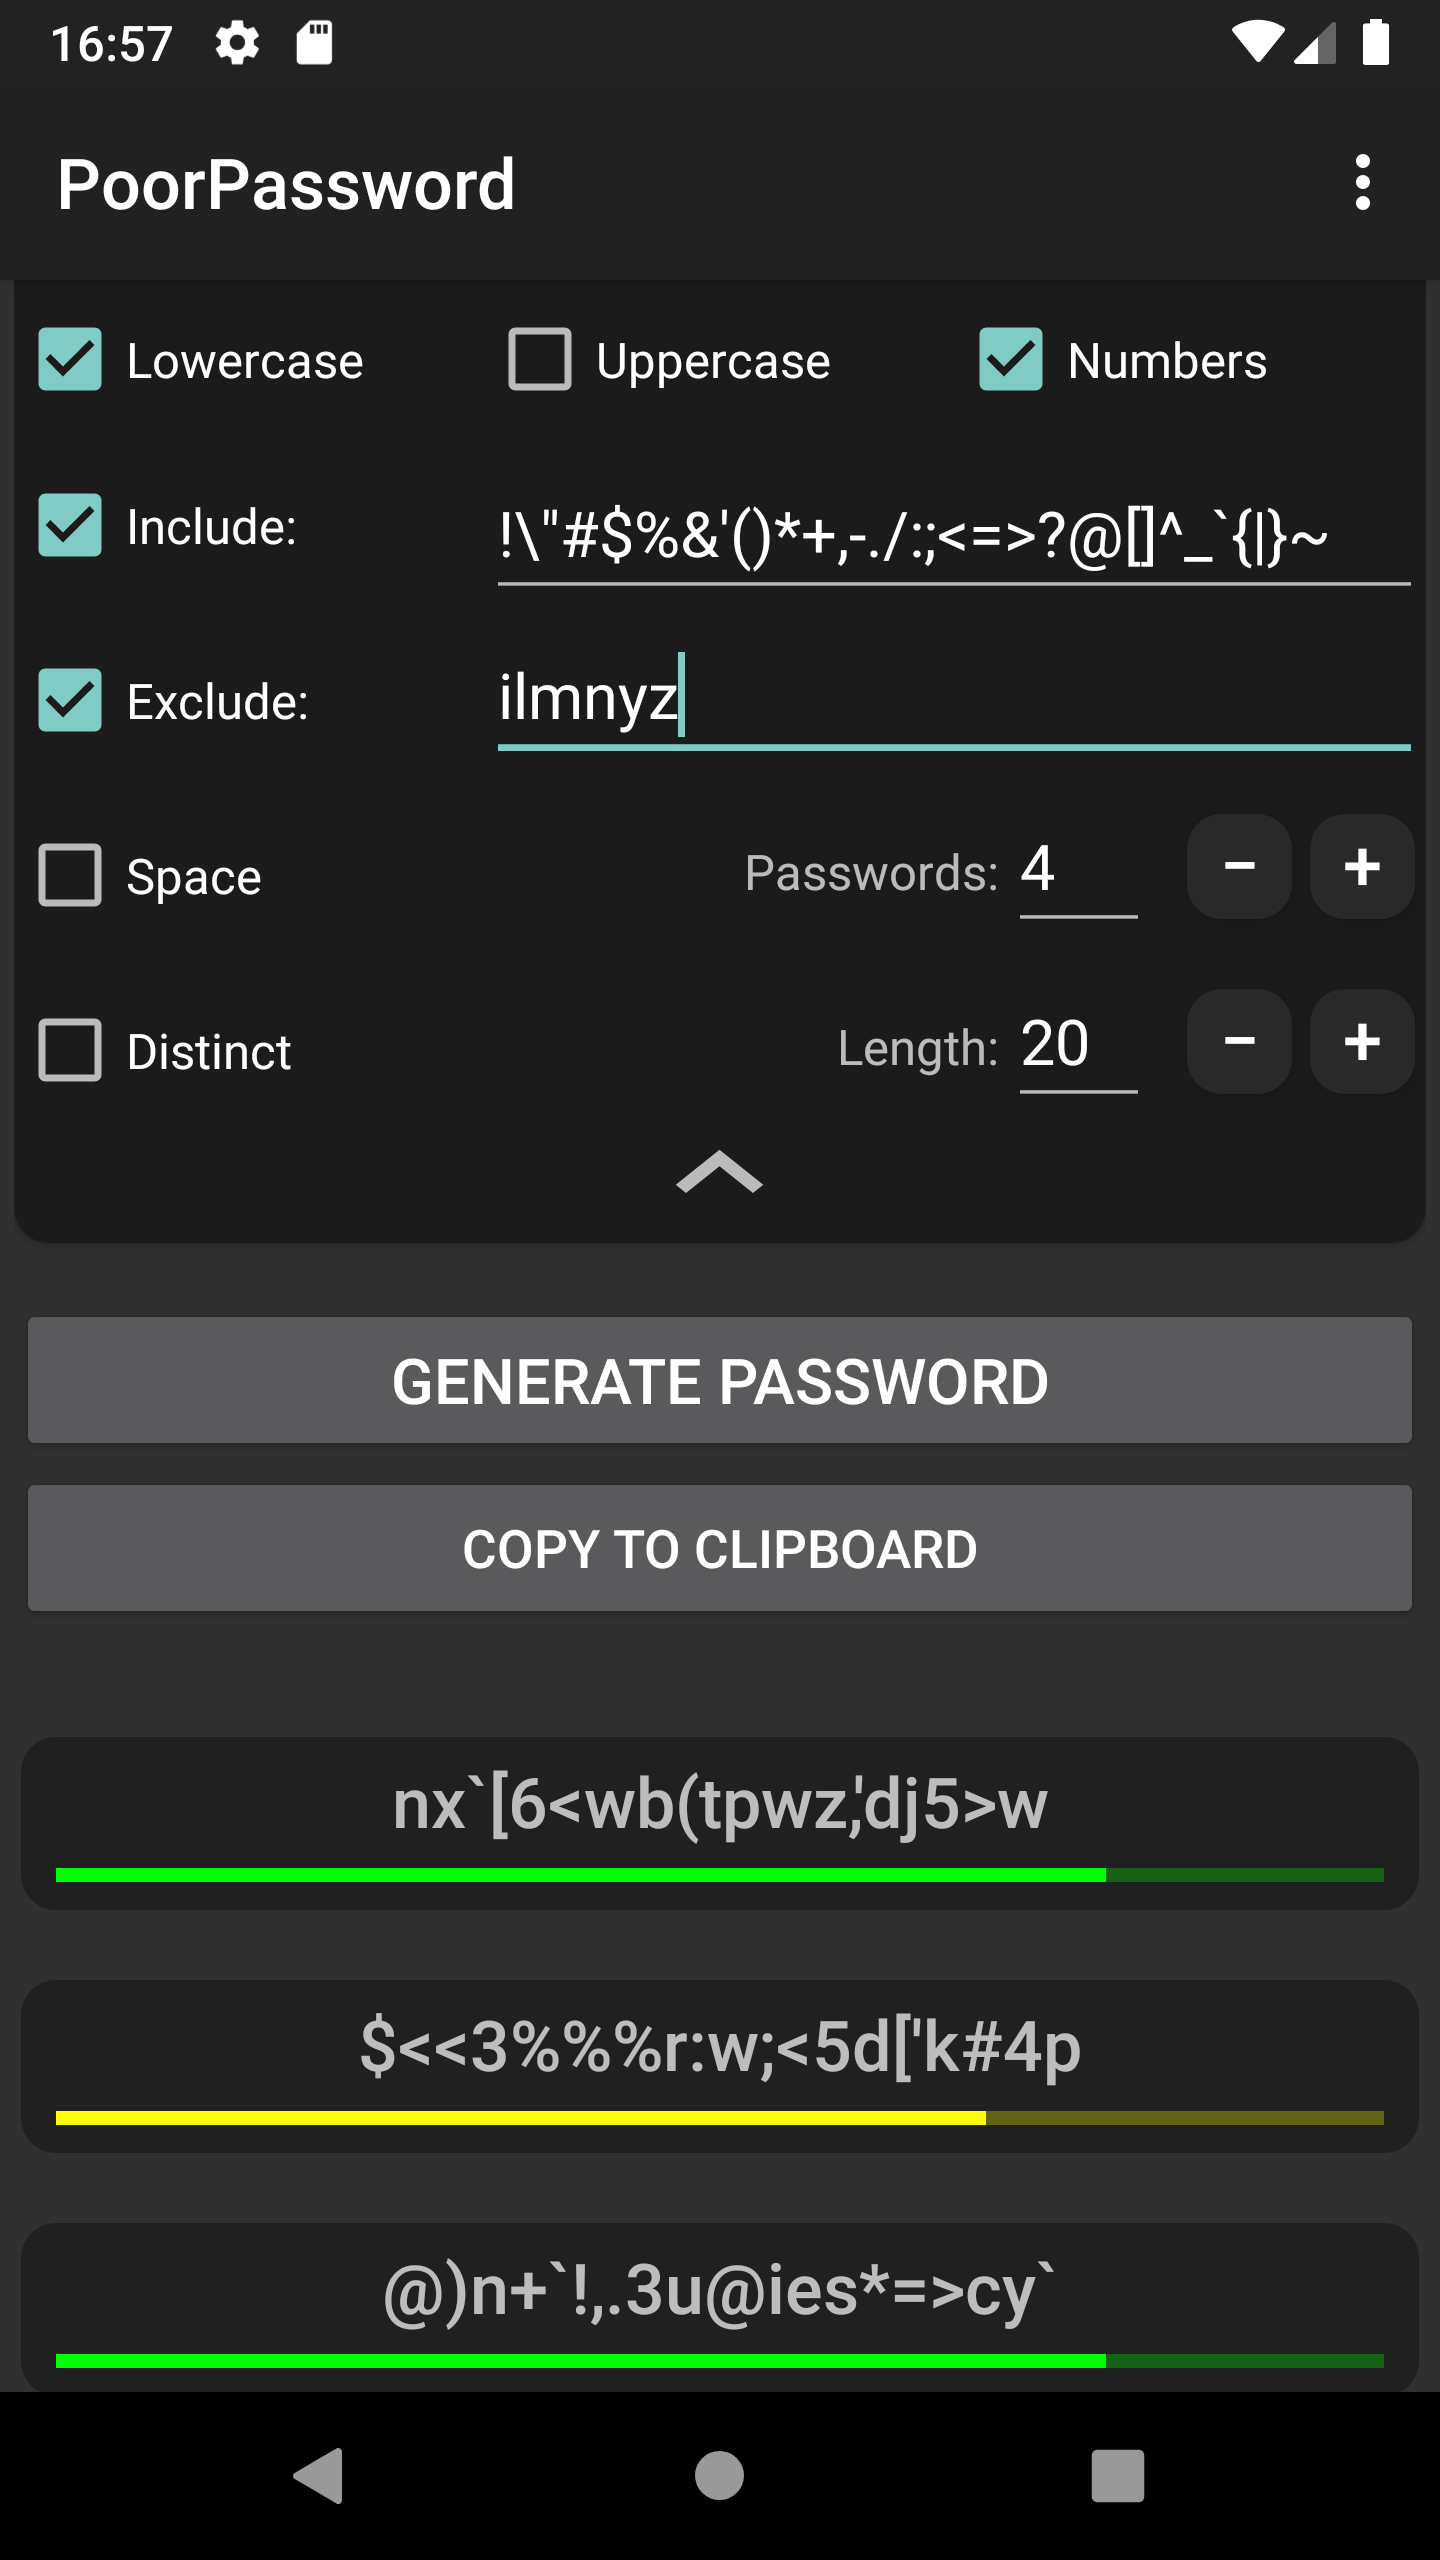 PasswordGenerator 23.6.13 download the last version for android